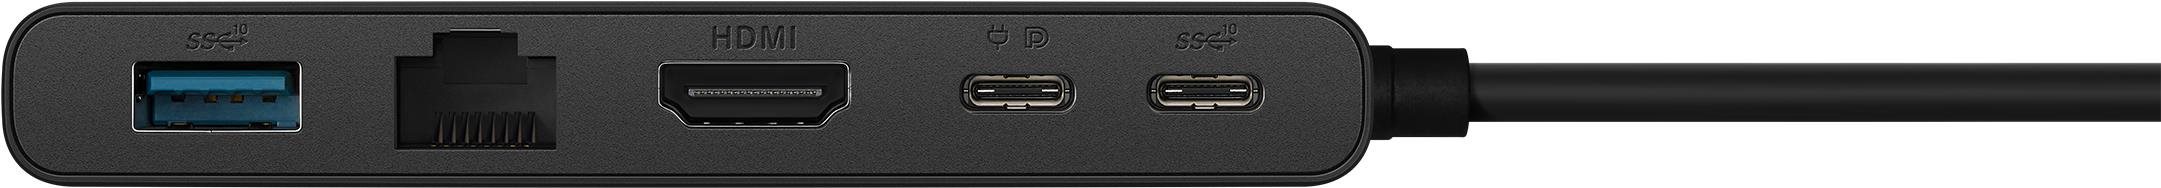 Dokovacia stanica ASUS DC201 Dual 4K USB-C Dock ...